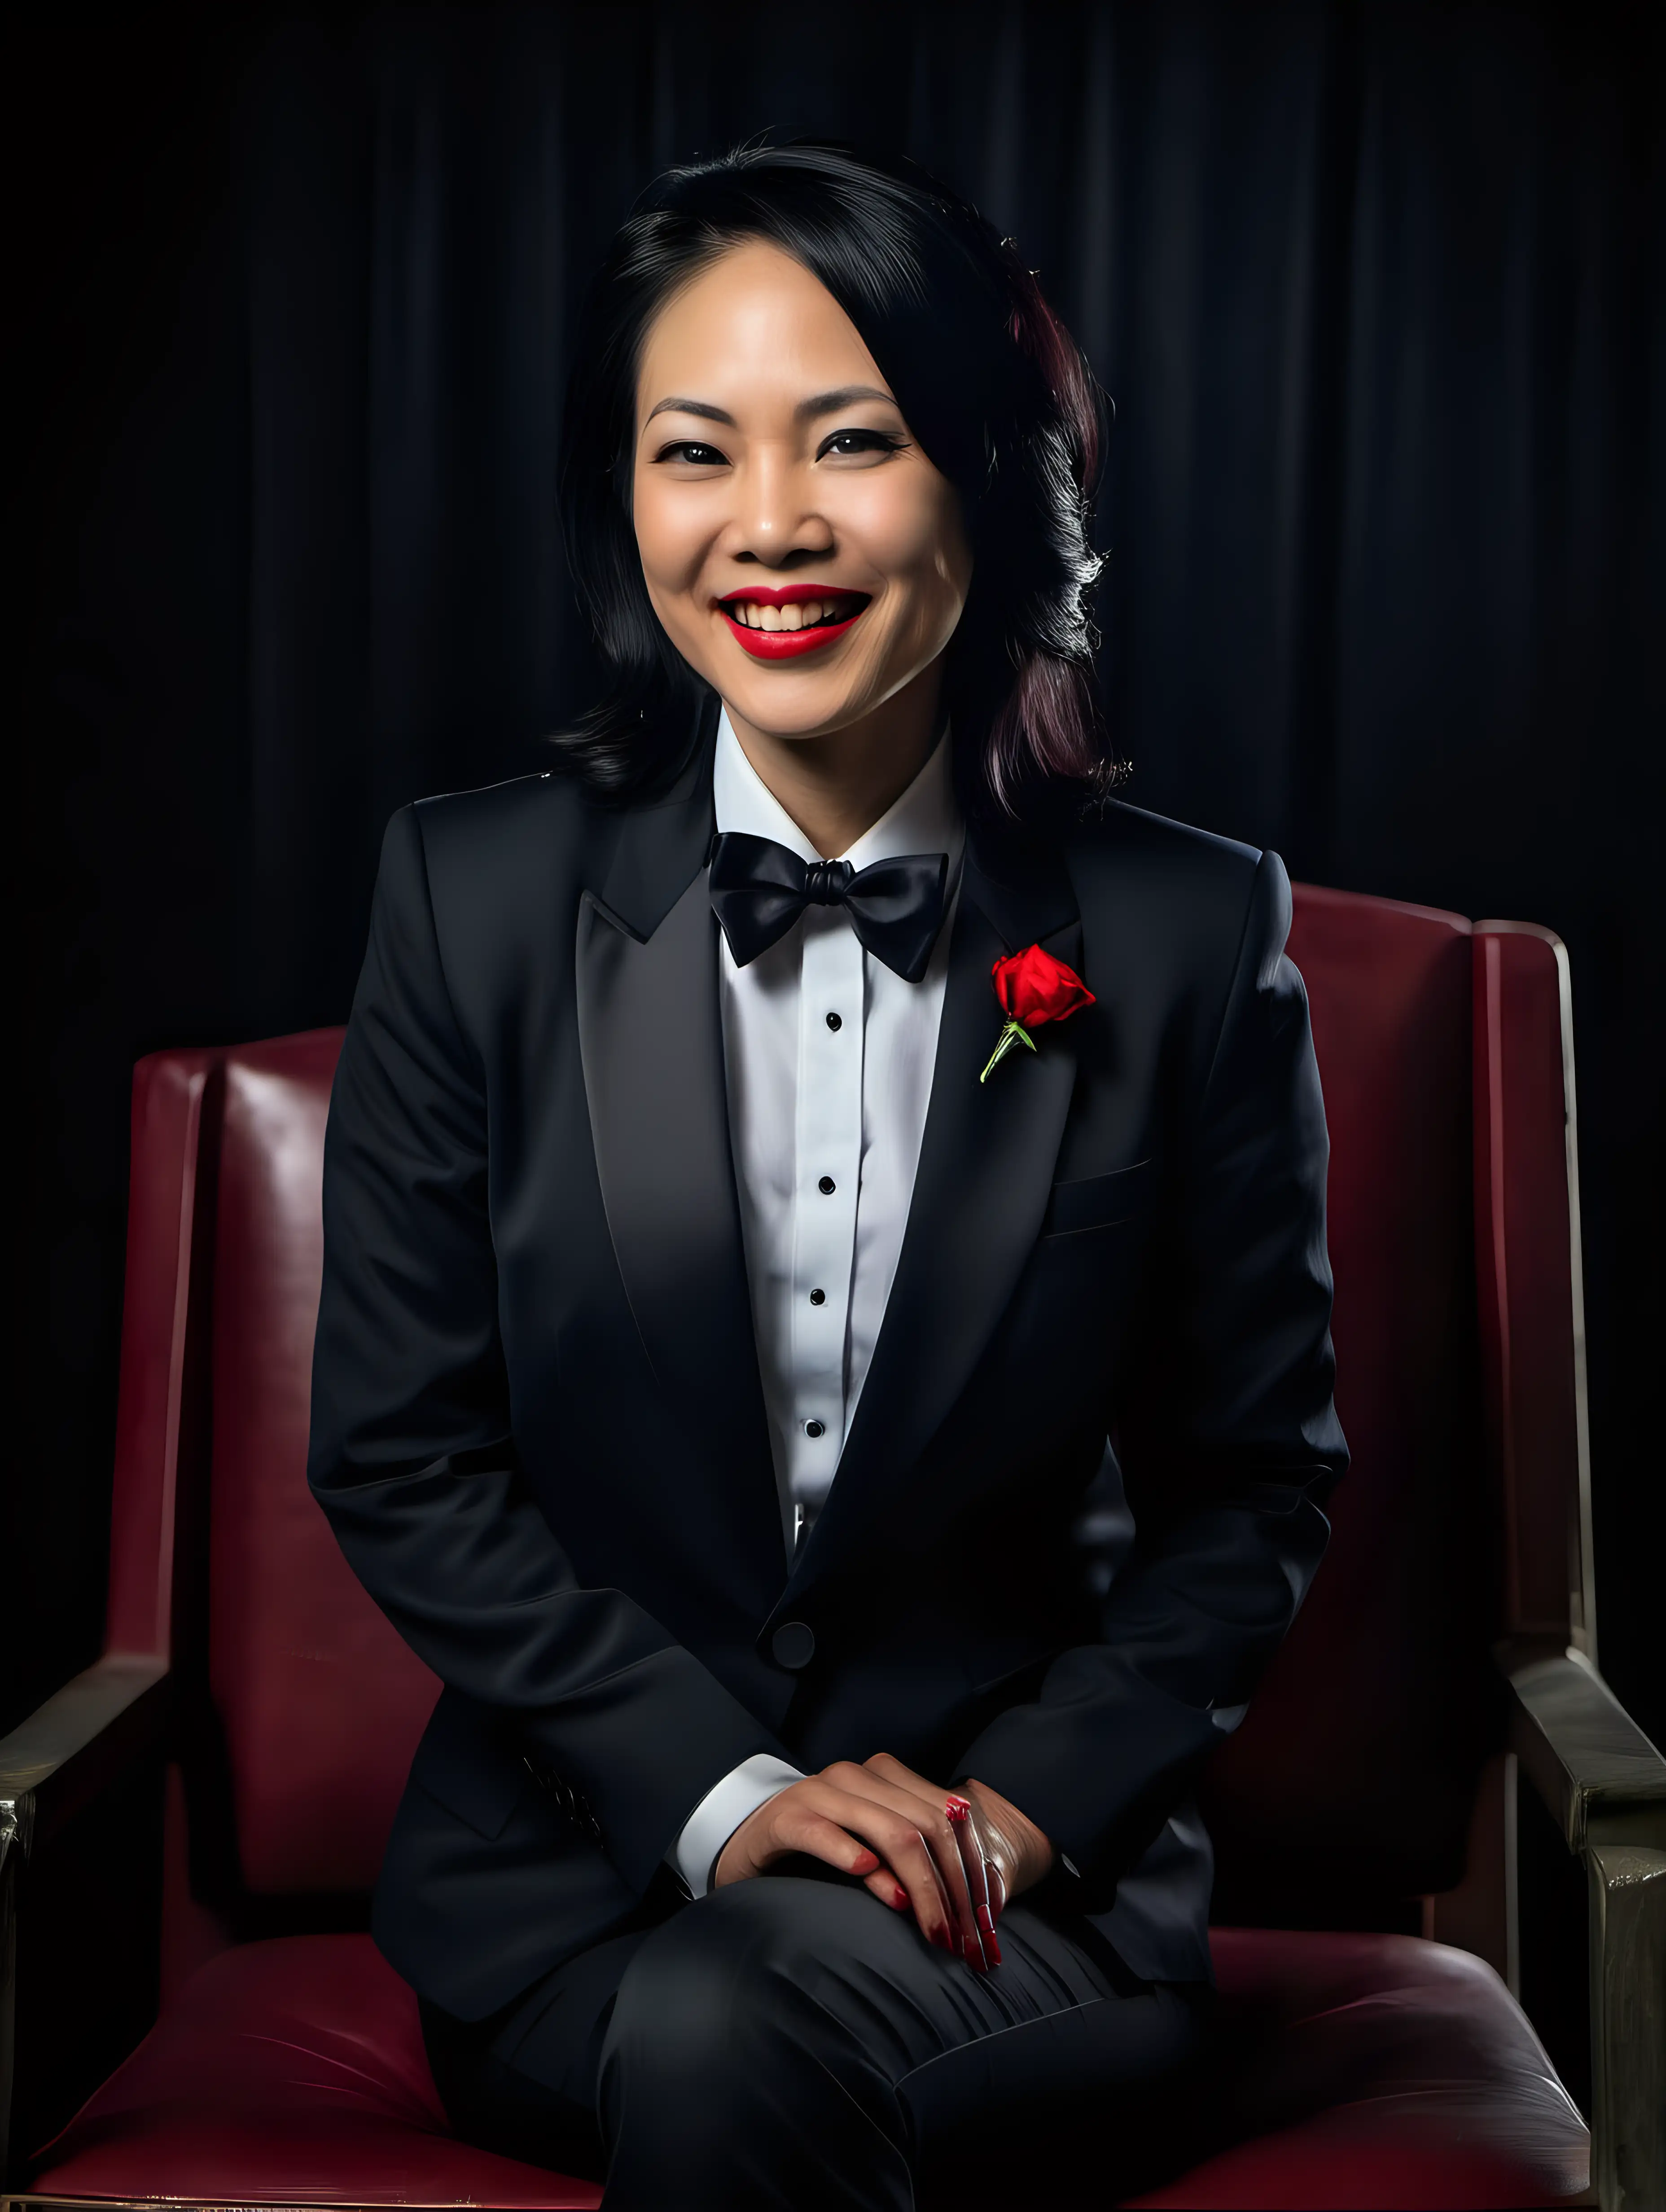 Elegant-Vietnamese-Woman-in-Open-Tuxedo-Smiling-in-Dimly-Lit-Room